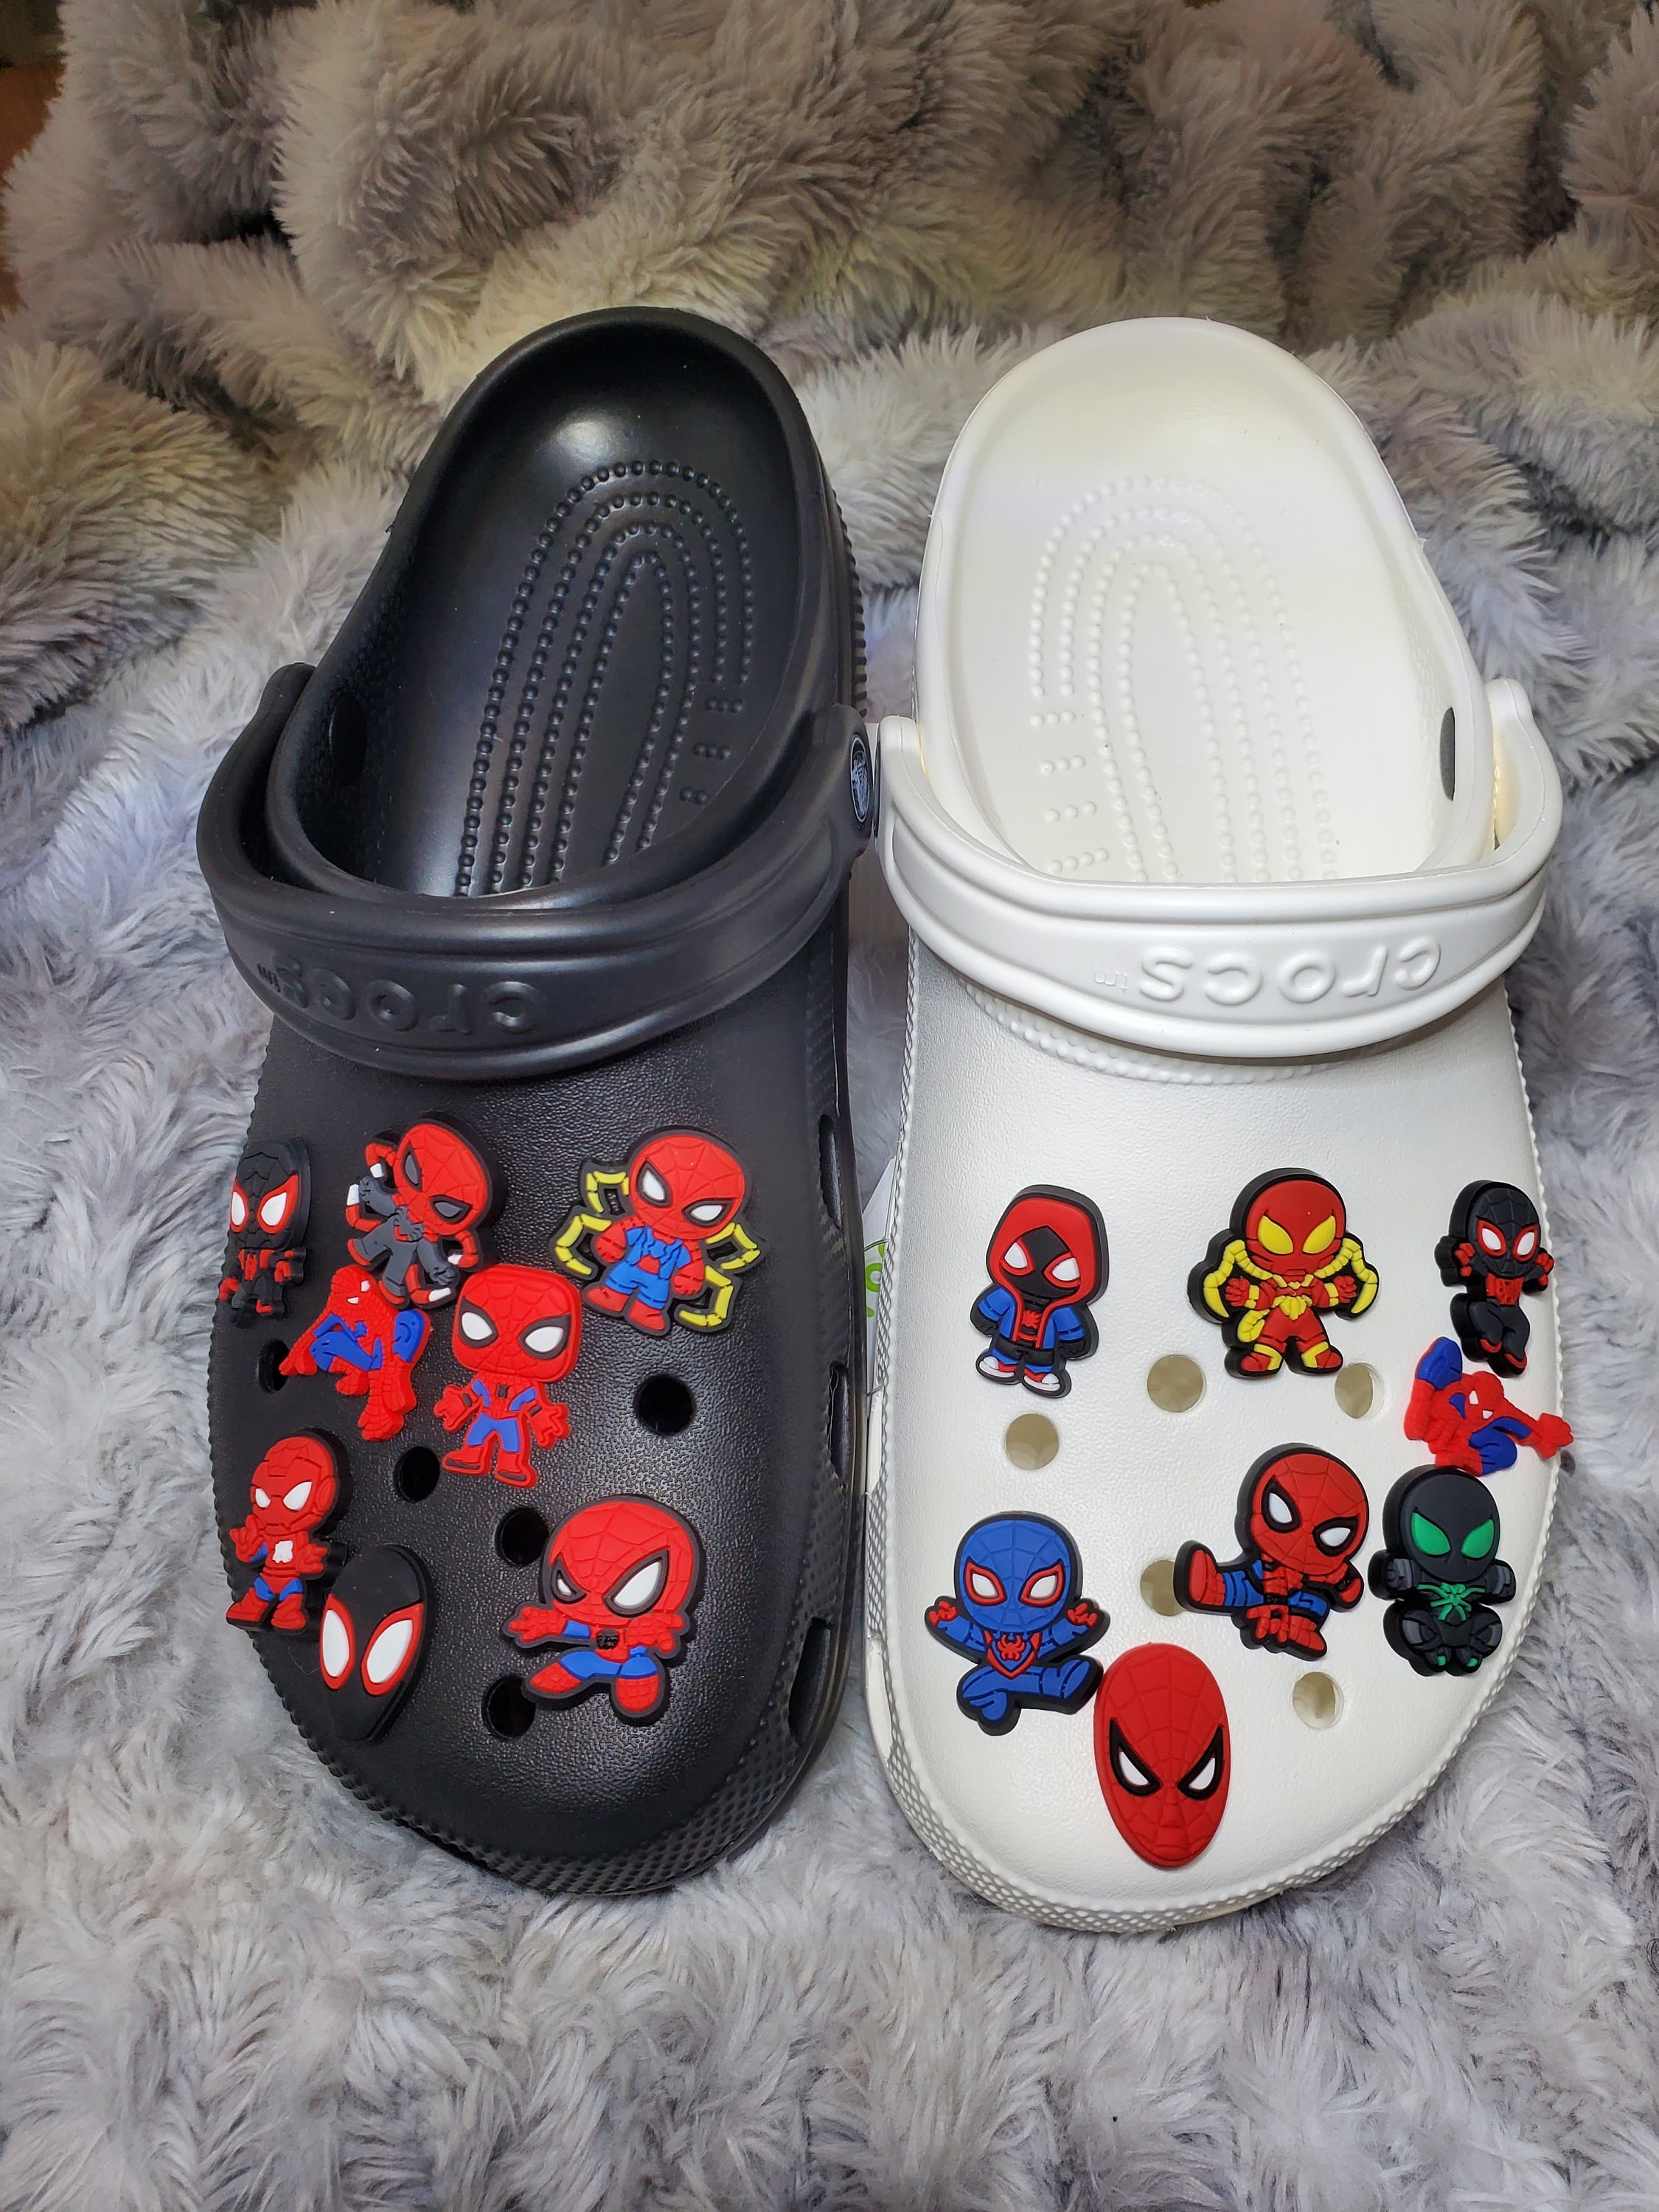 Spiderman Spidey Marvel Avengers style crocs charms shoe jibbitz superhero  croc clog charm jibbit